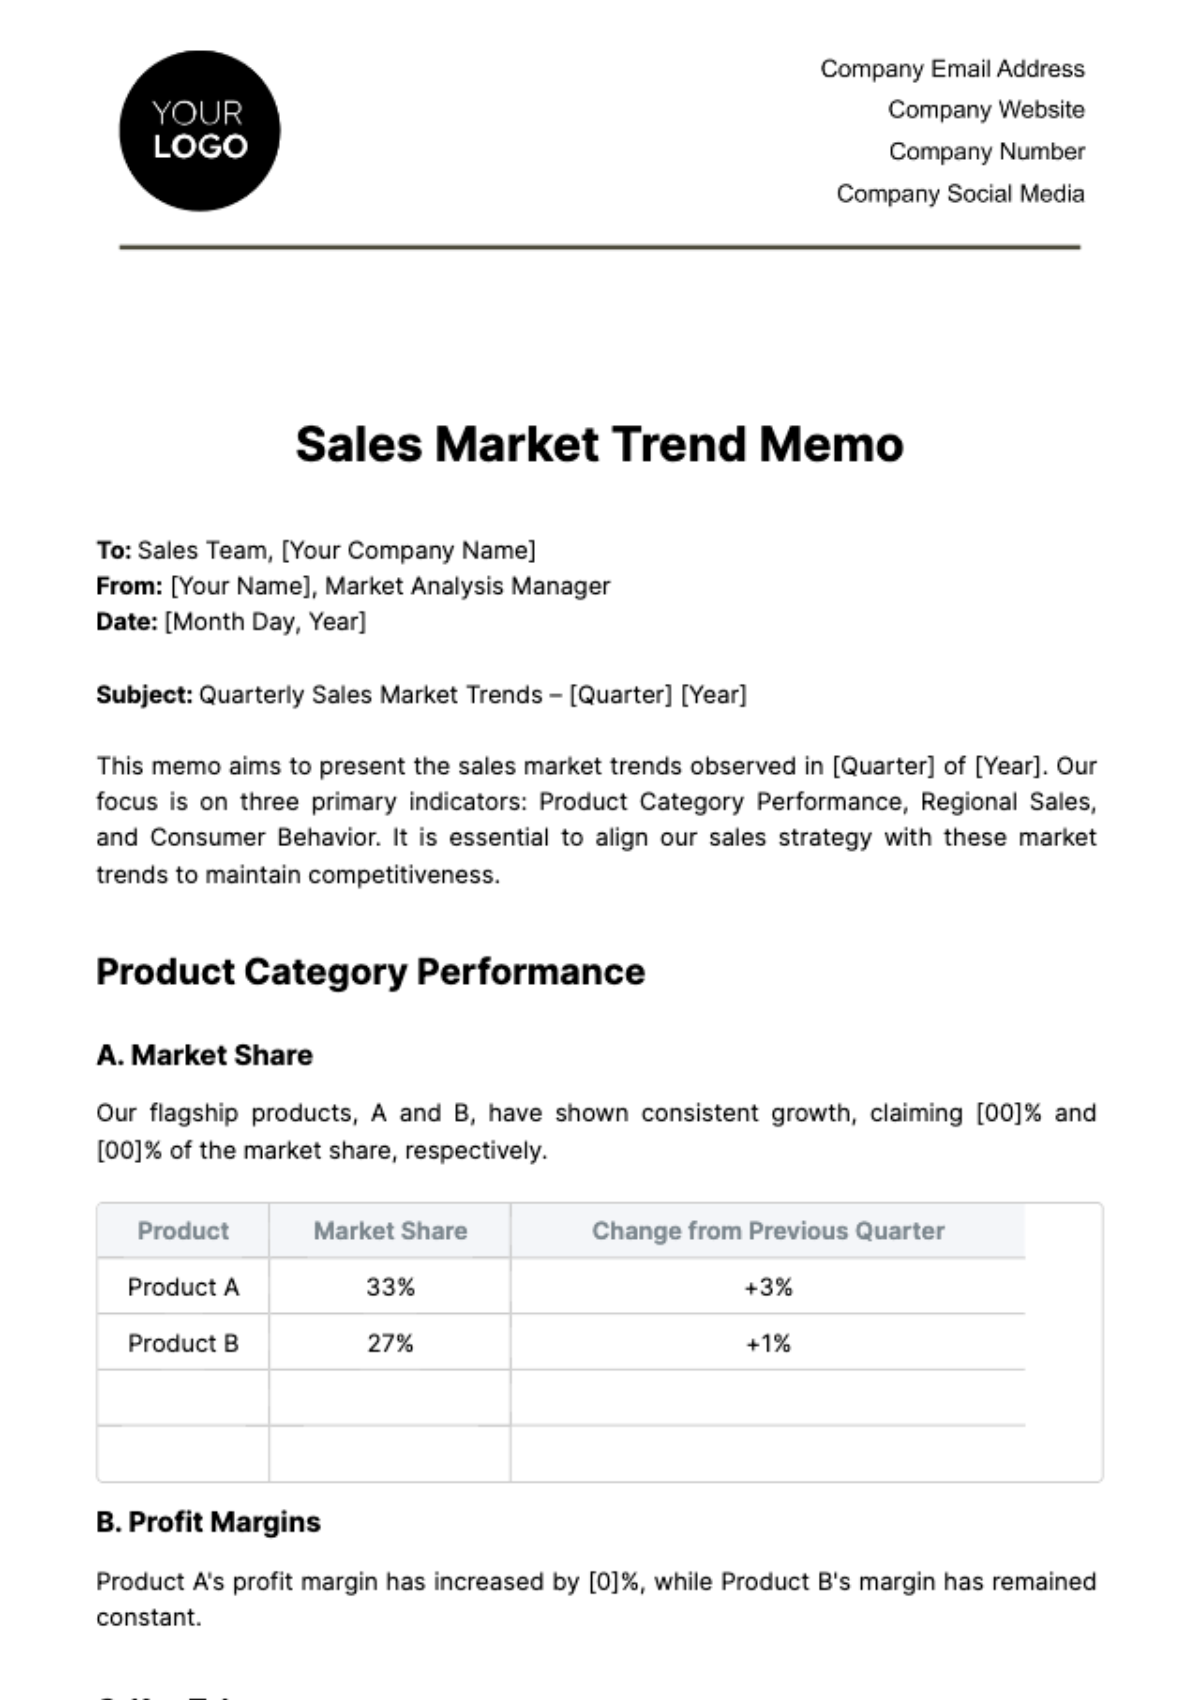 Sales Market Trend Memo Template